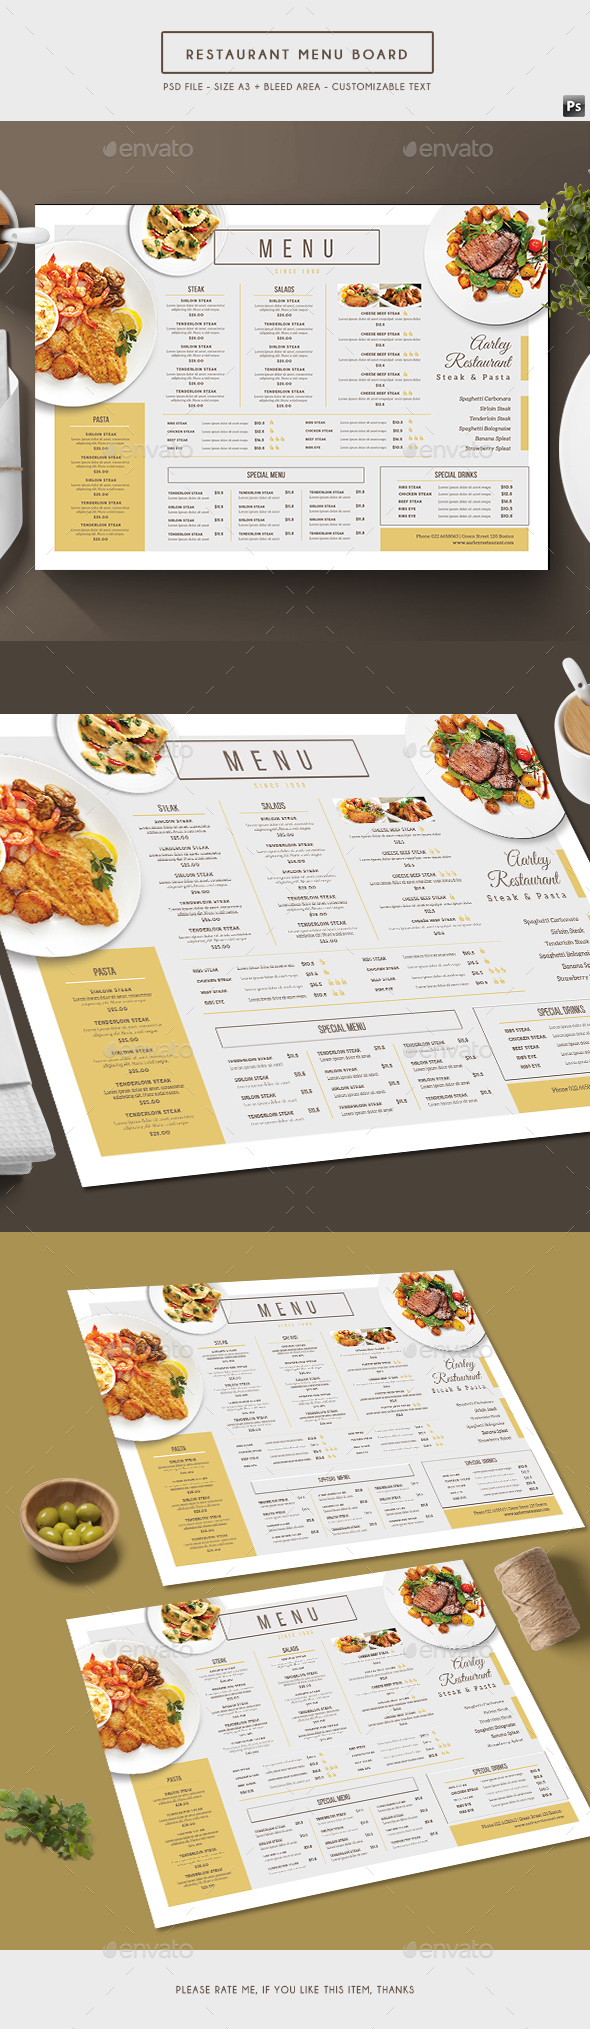 Simple Restaurant Menu Board